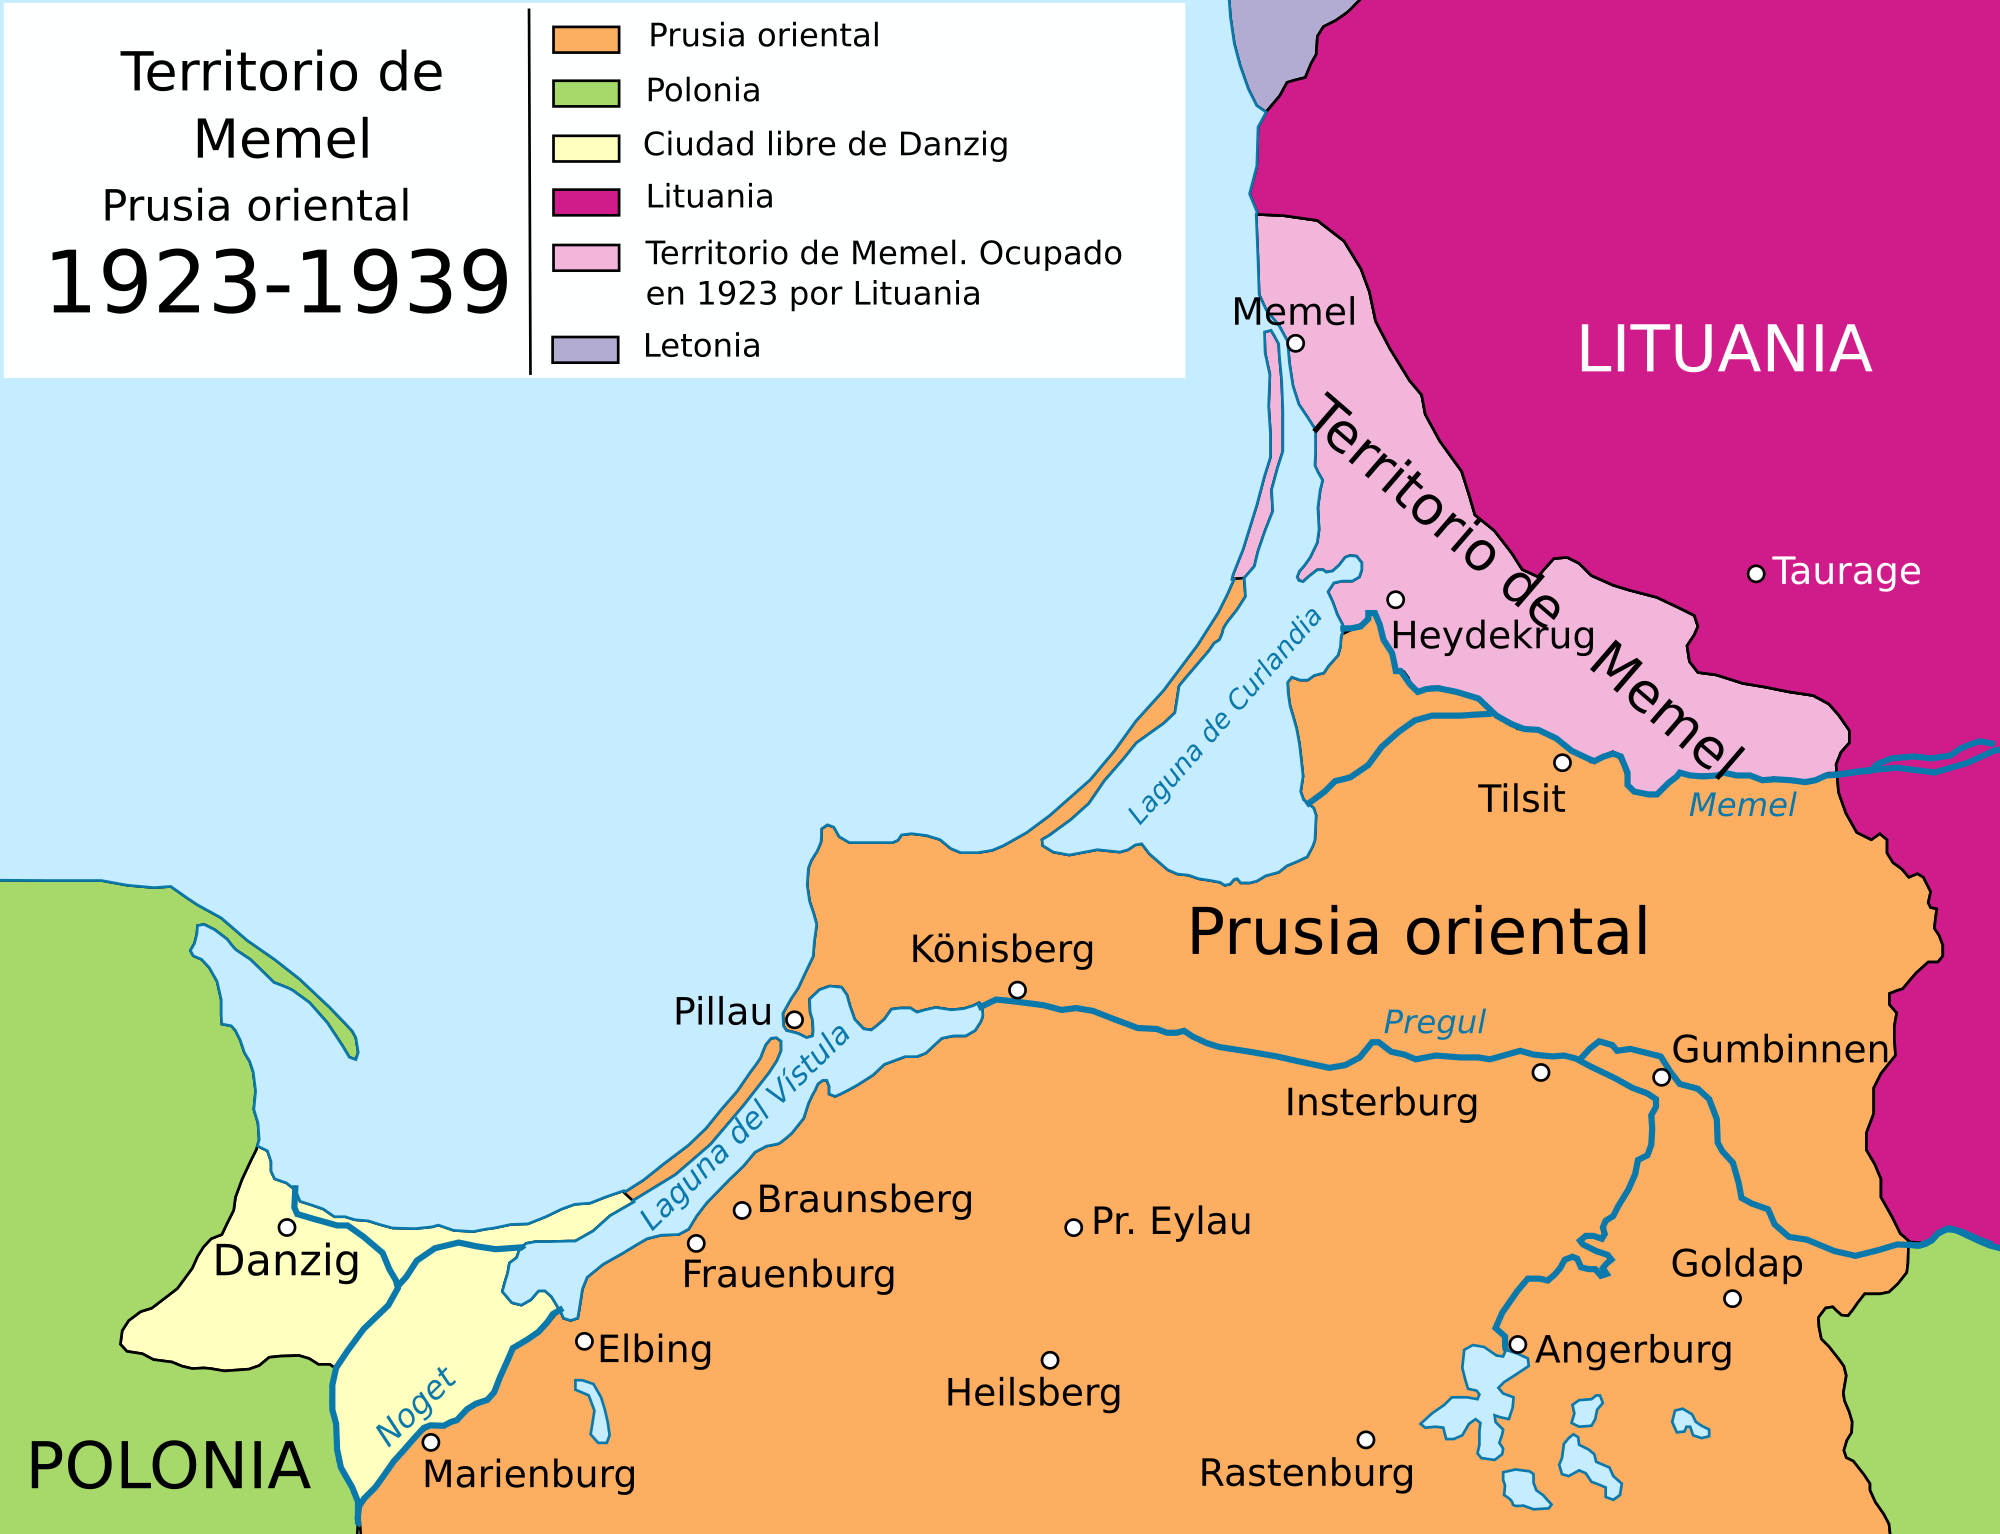 Lithuanian citizenship in the Klaipėda Region